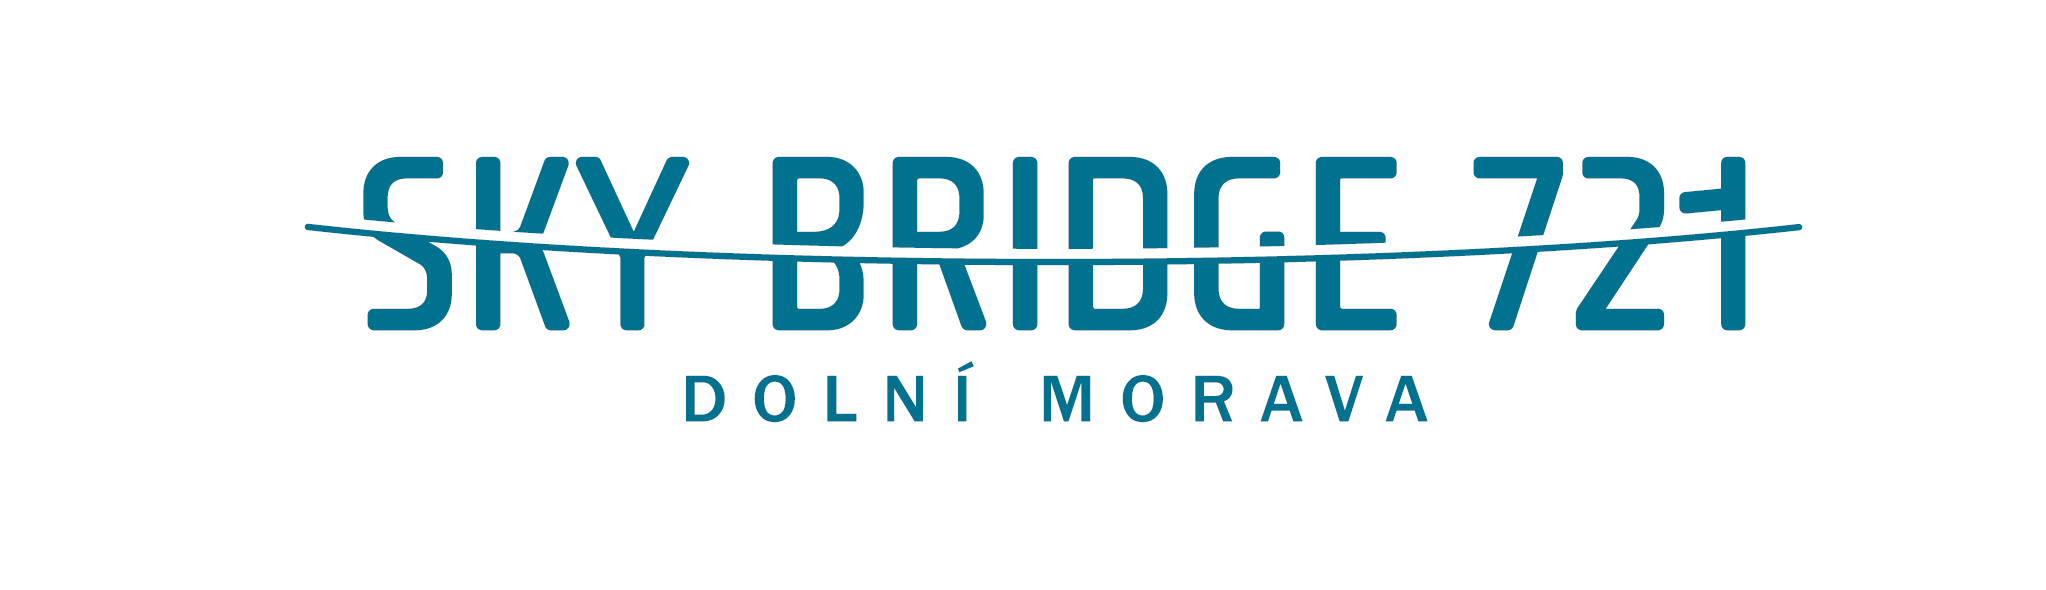 sky-bridge-logo